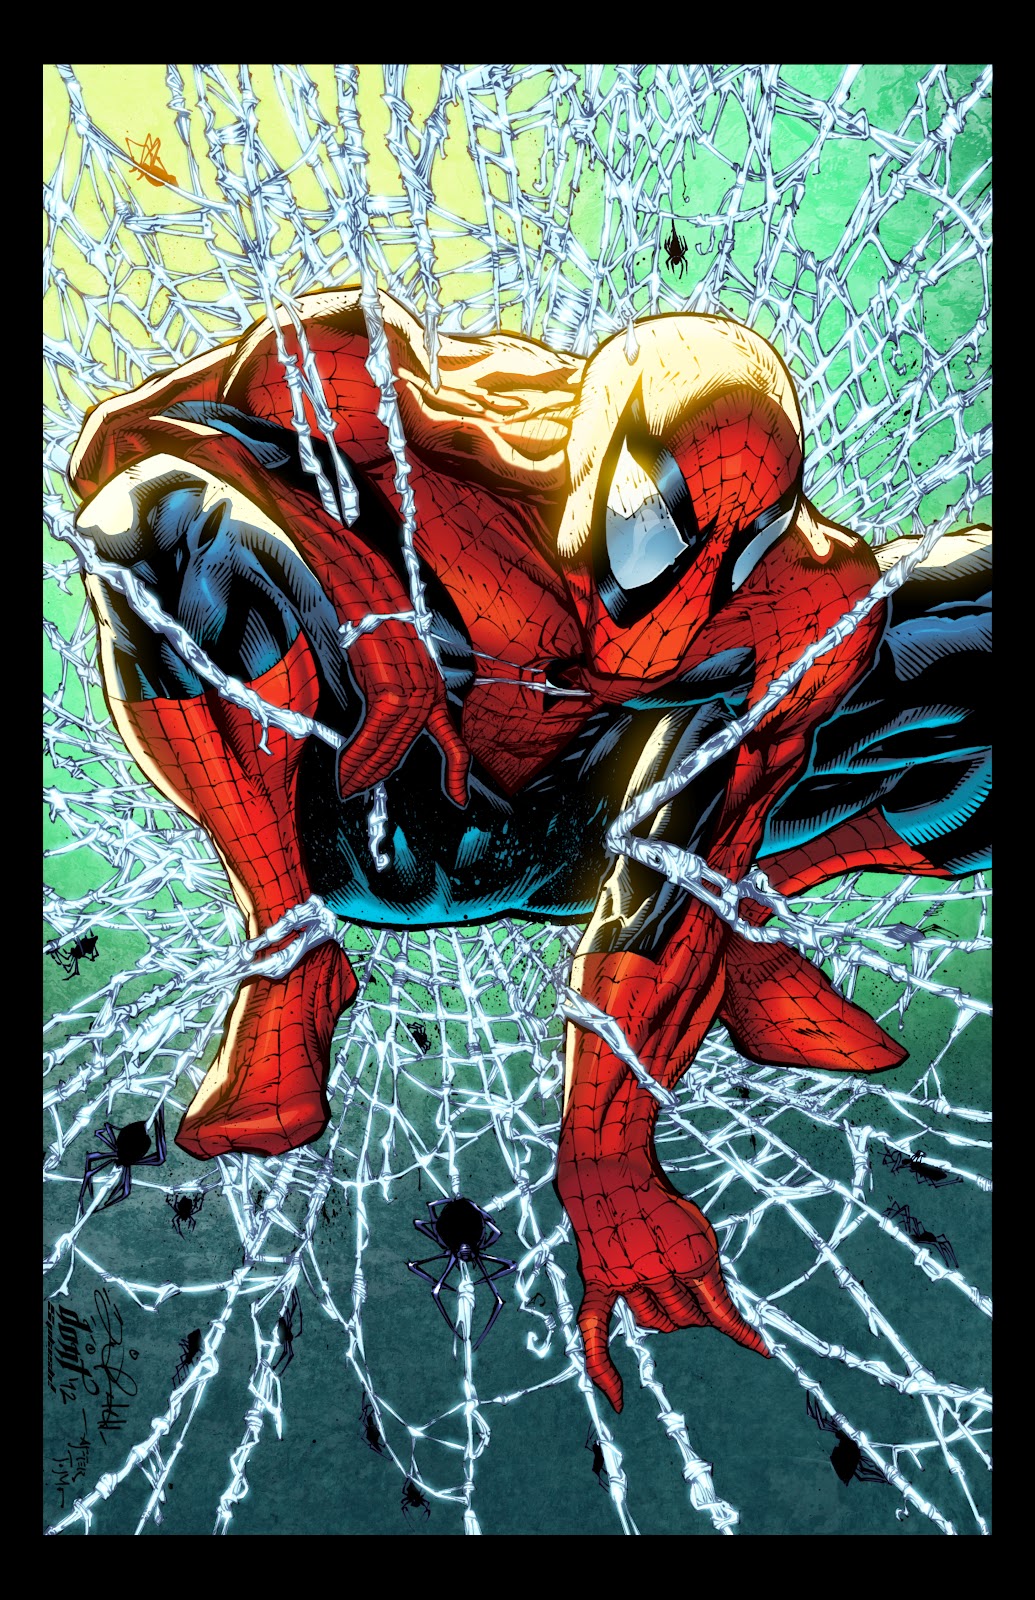 SpidermanCover01-COLORS-hi-rez-jpg.jpg